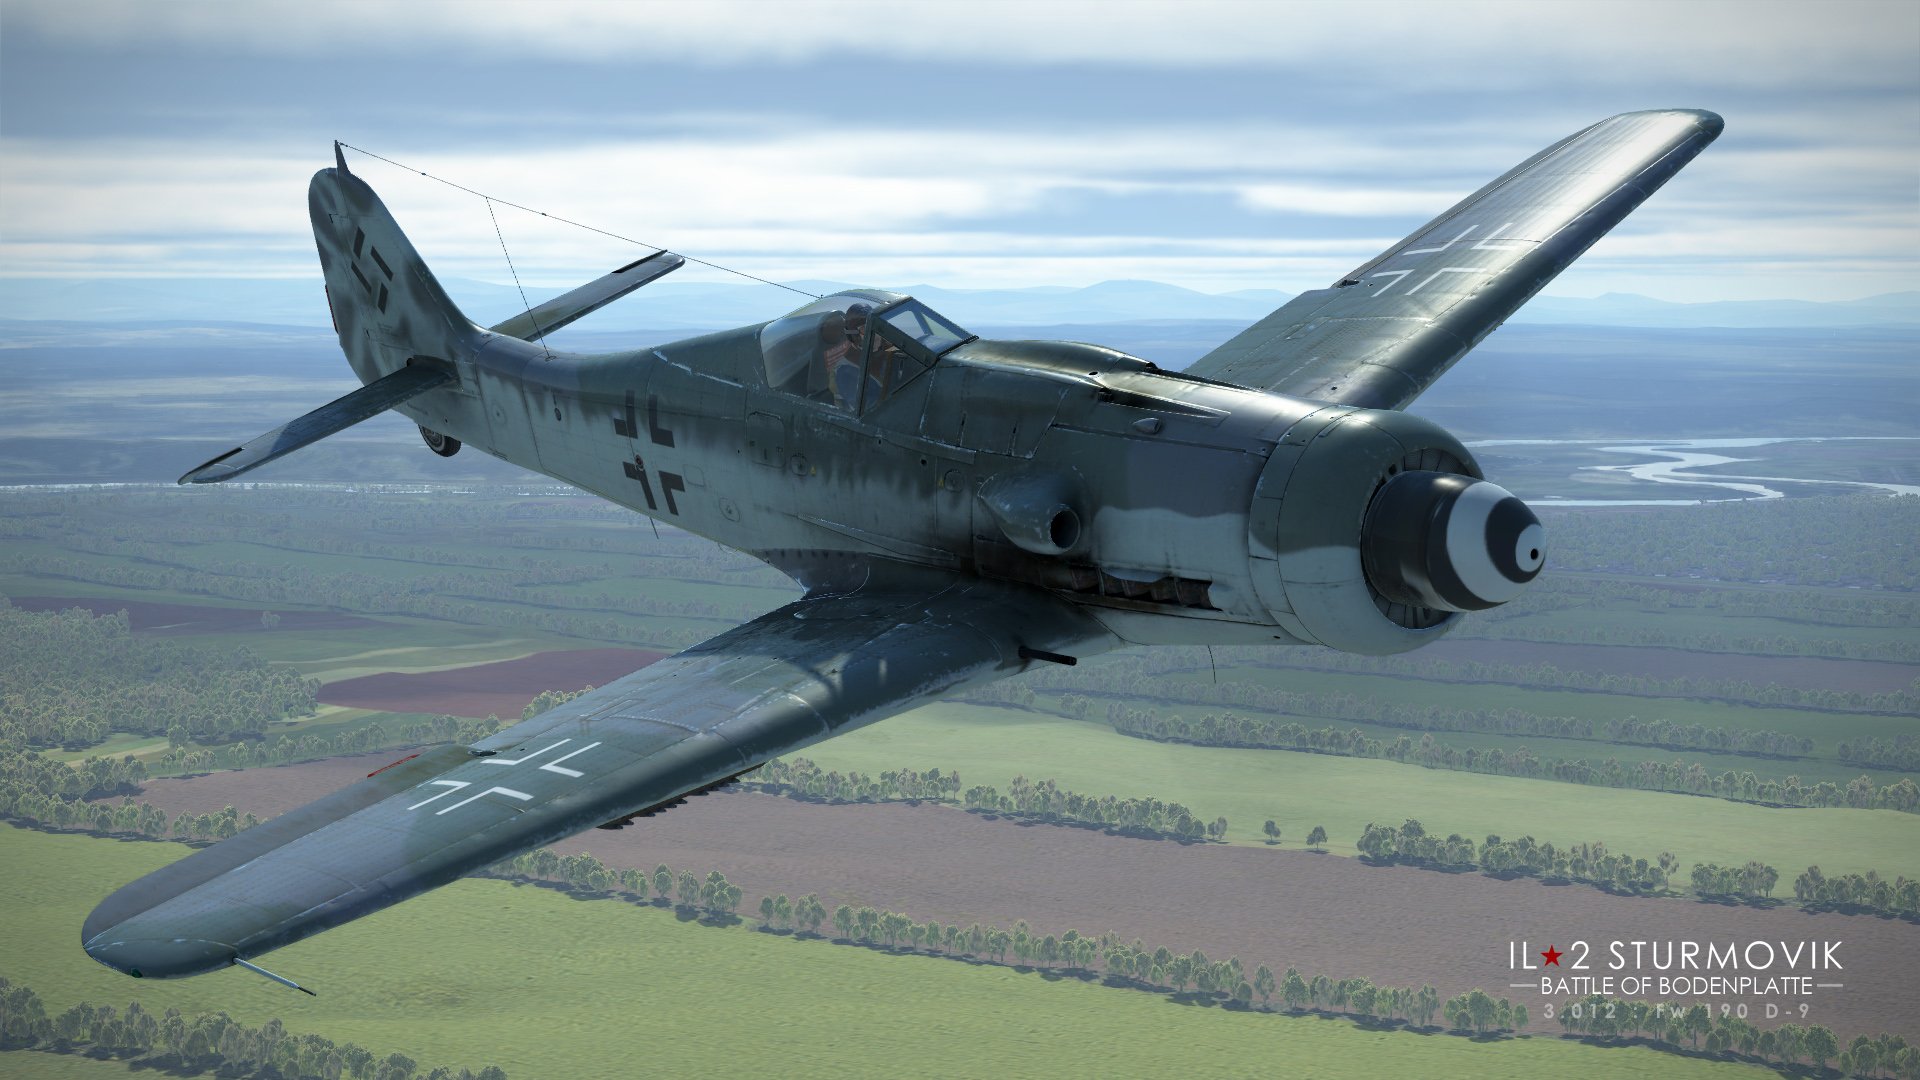 Fw 190 D-9 "Dora"